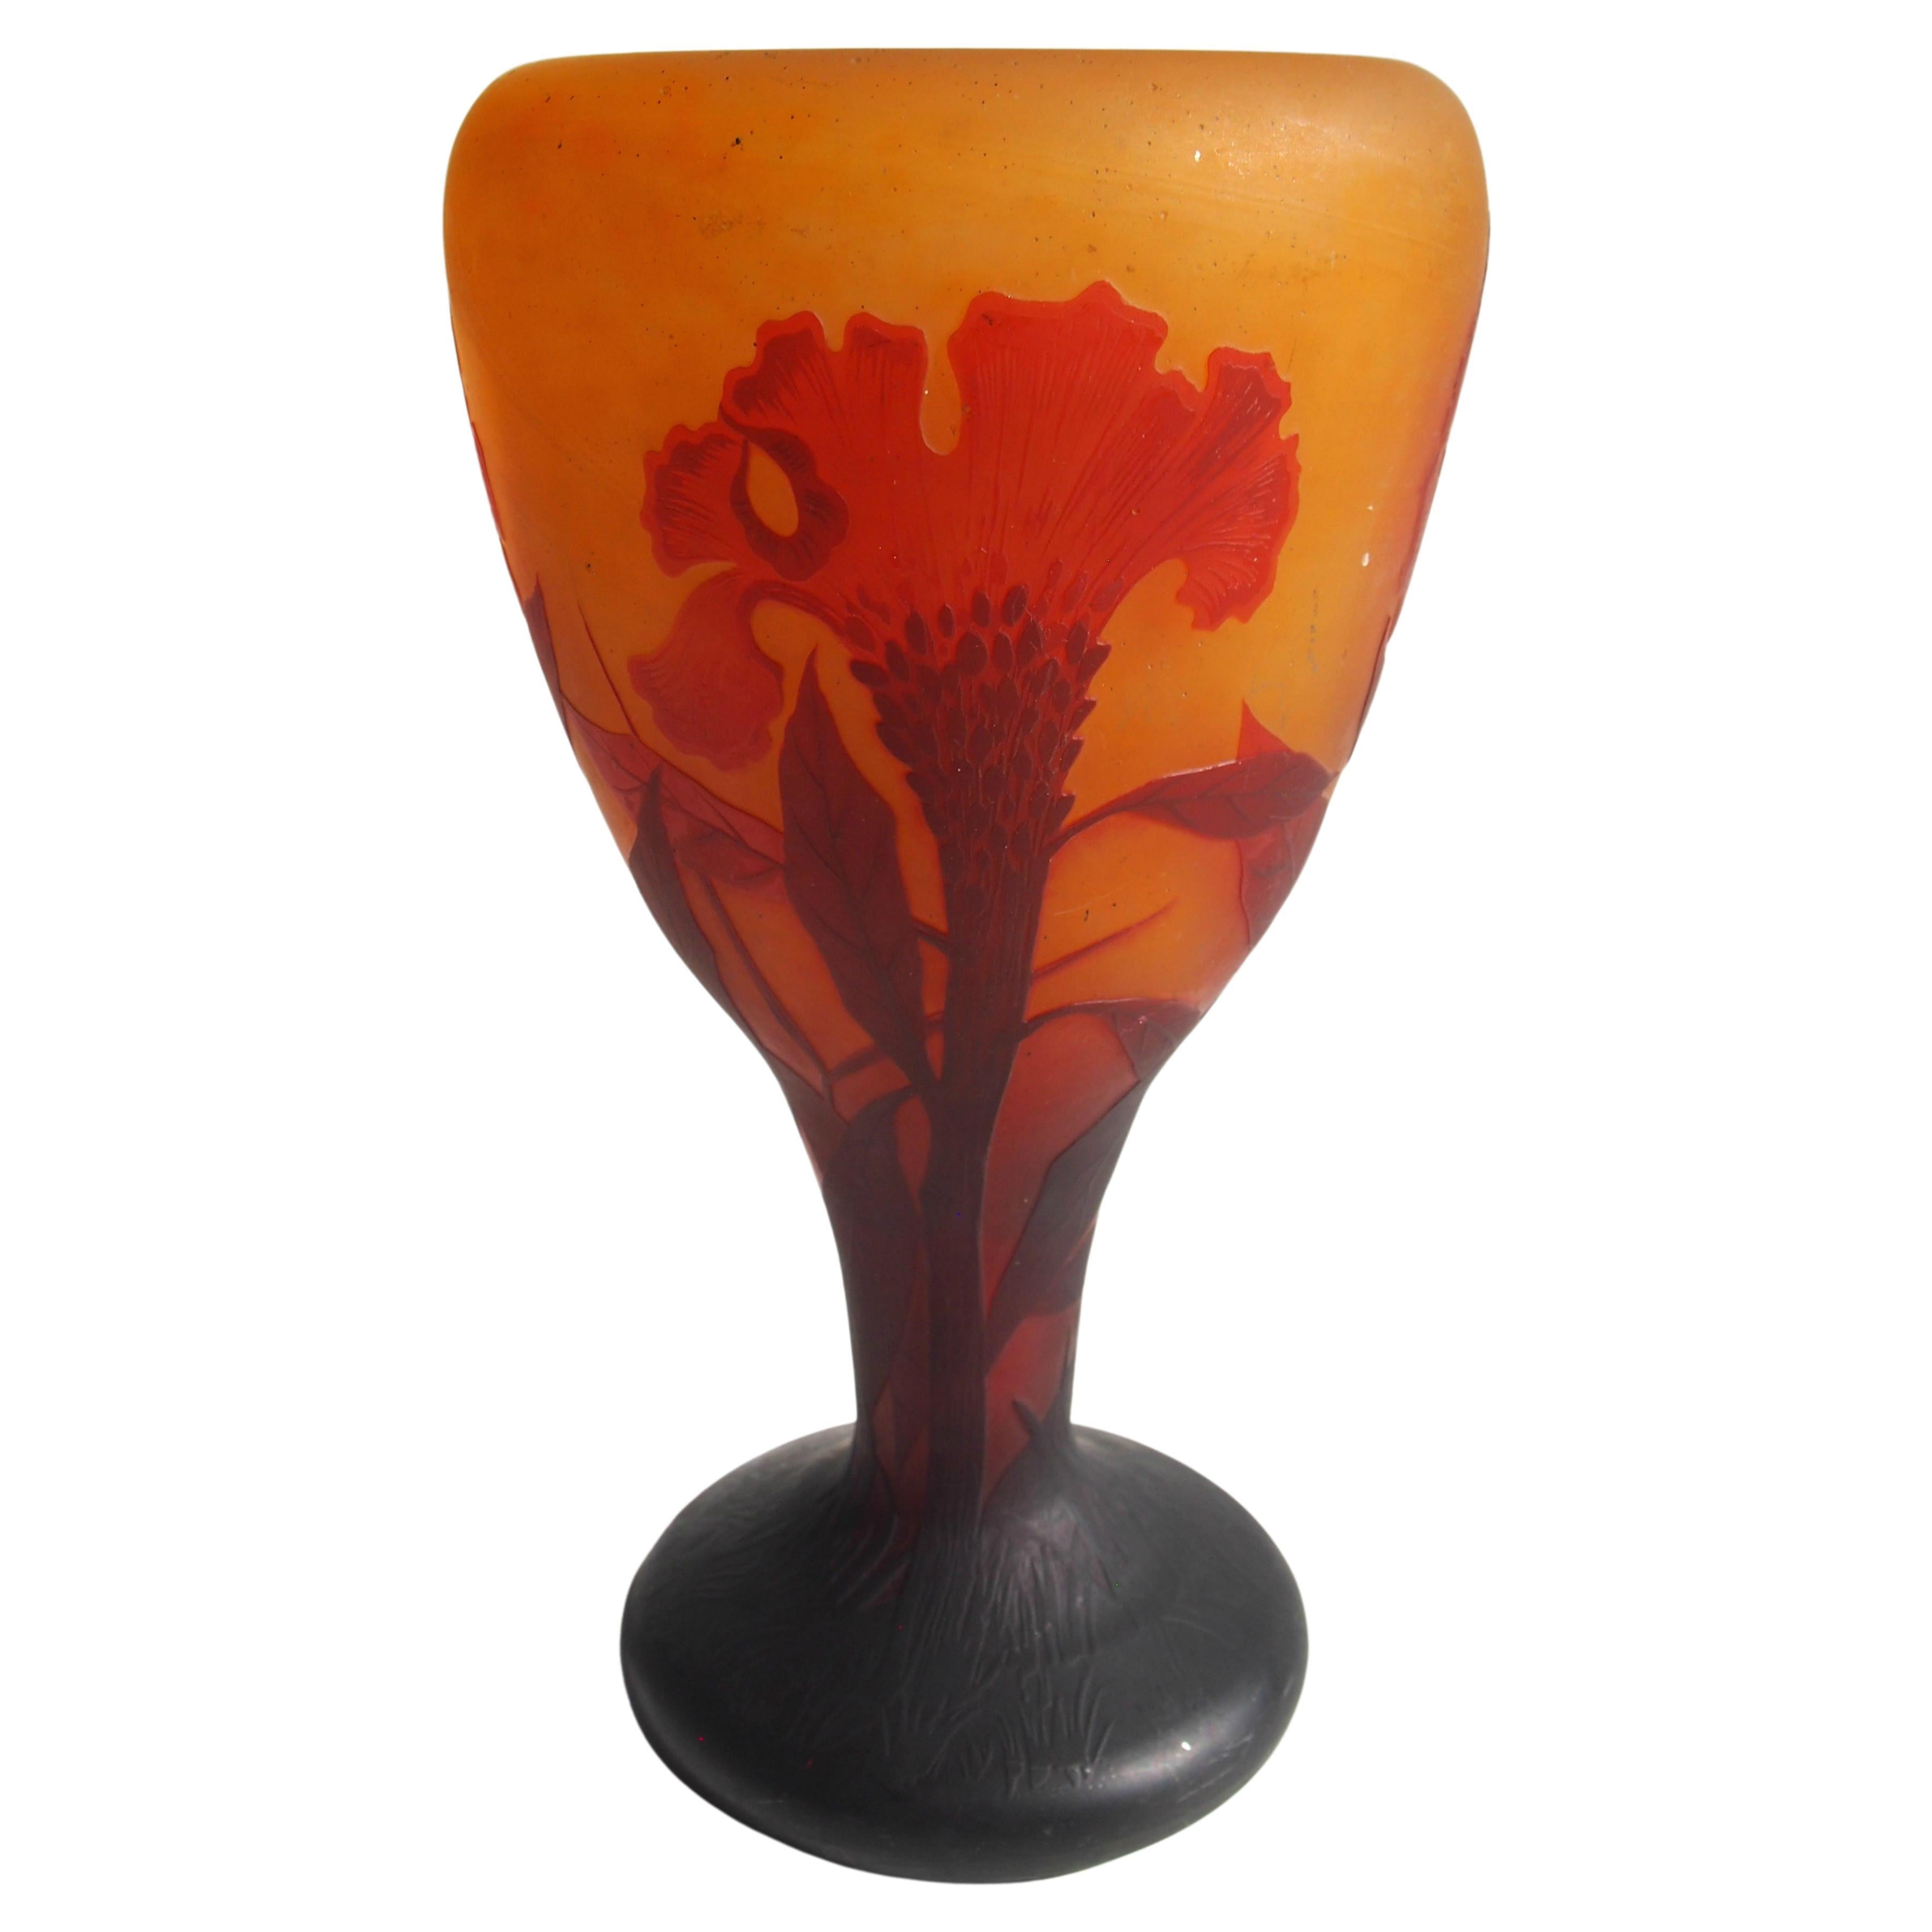 French Art Nouveau Daum Cameo Glass Cockscomb Vase 1900 For Sale